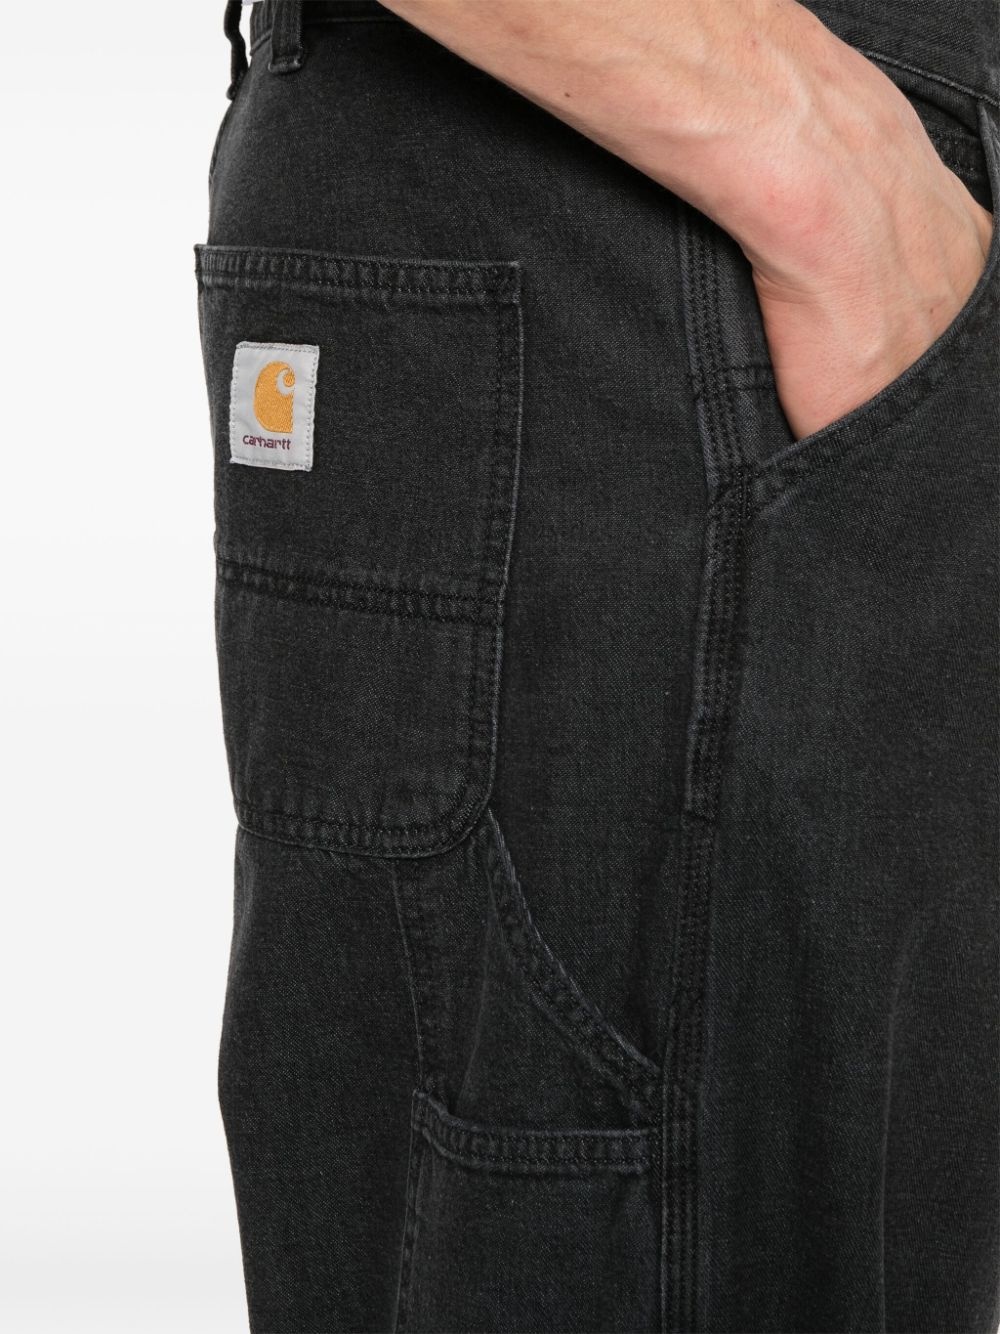 OG Single Knee jeans - 5